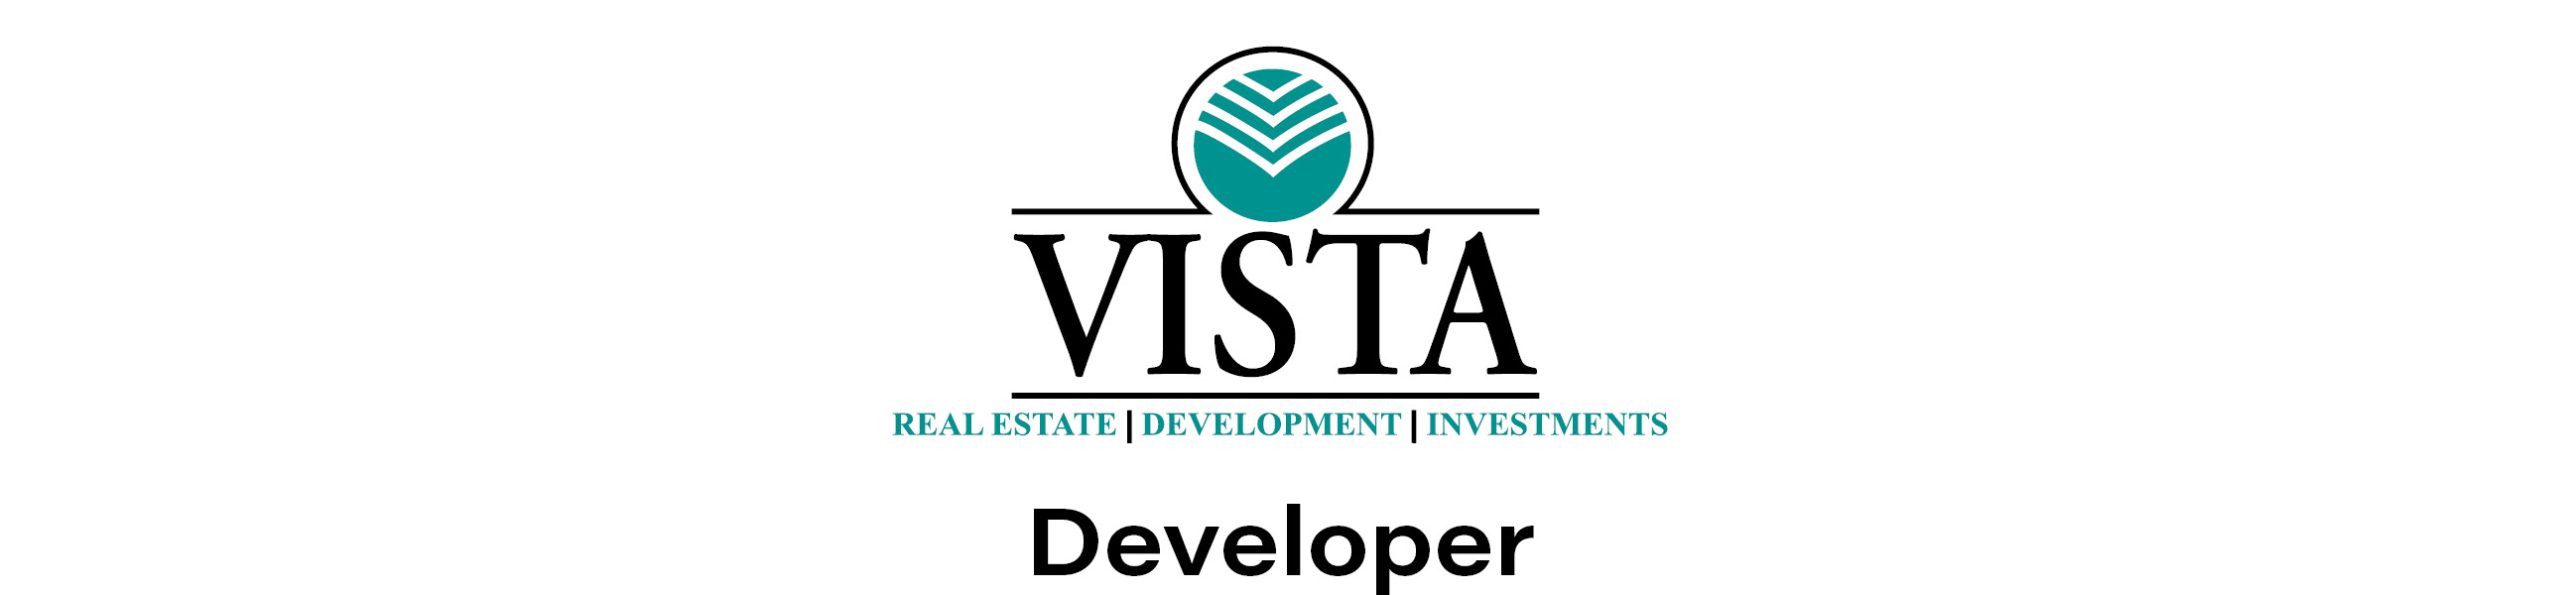  Vista Real Estate & Investment Corp